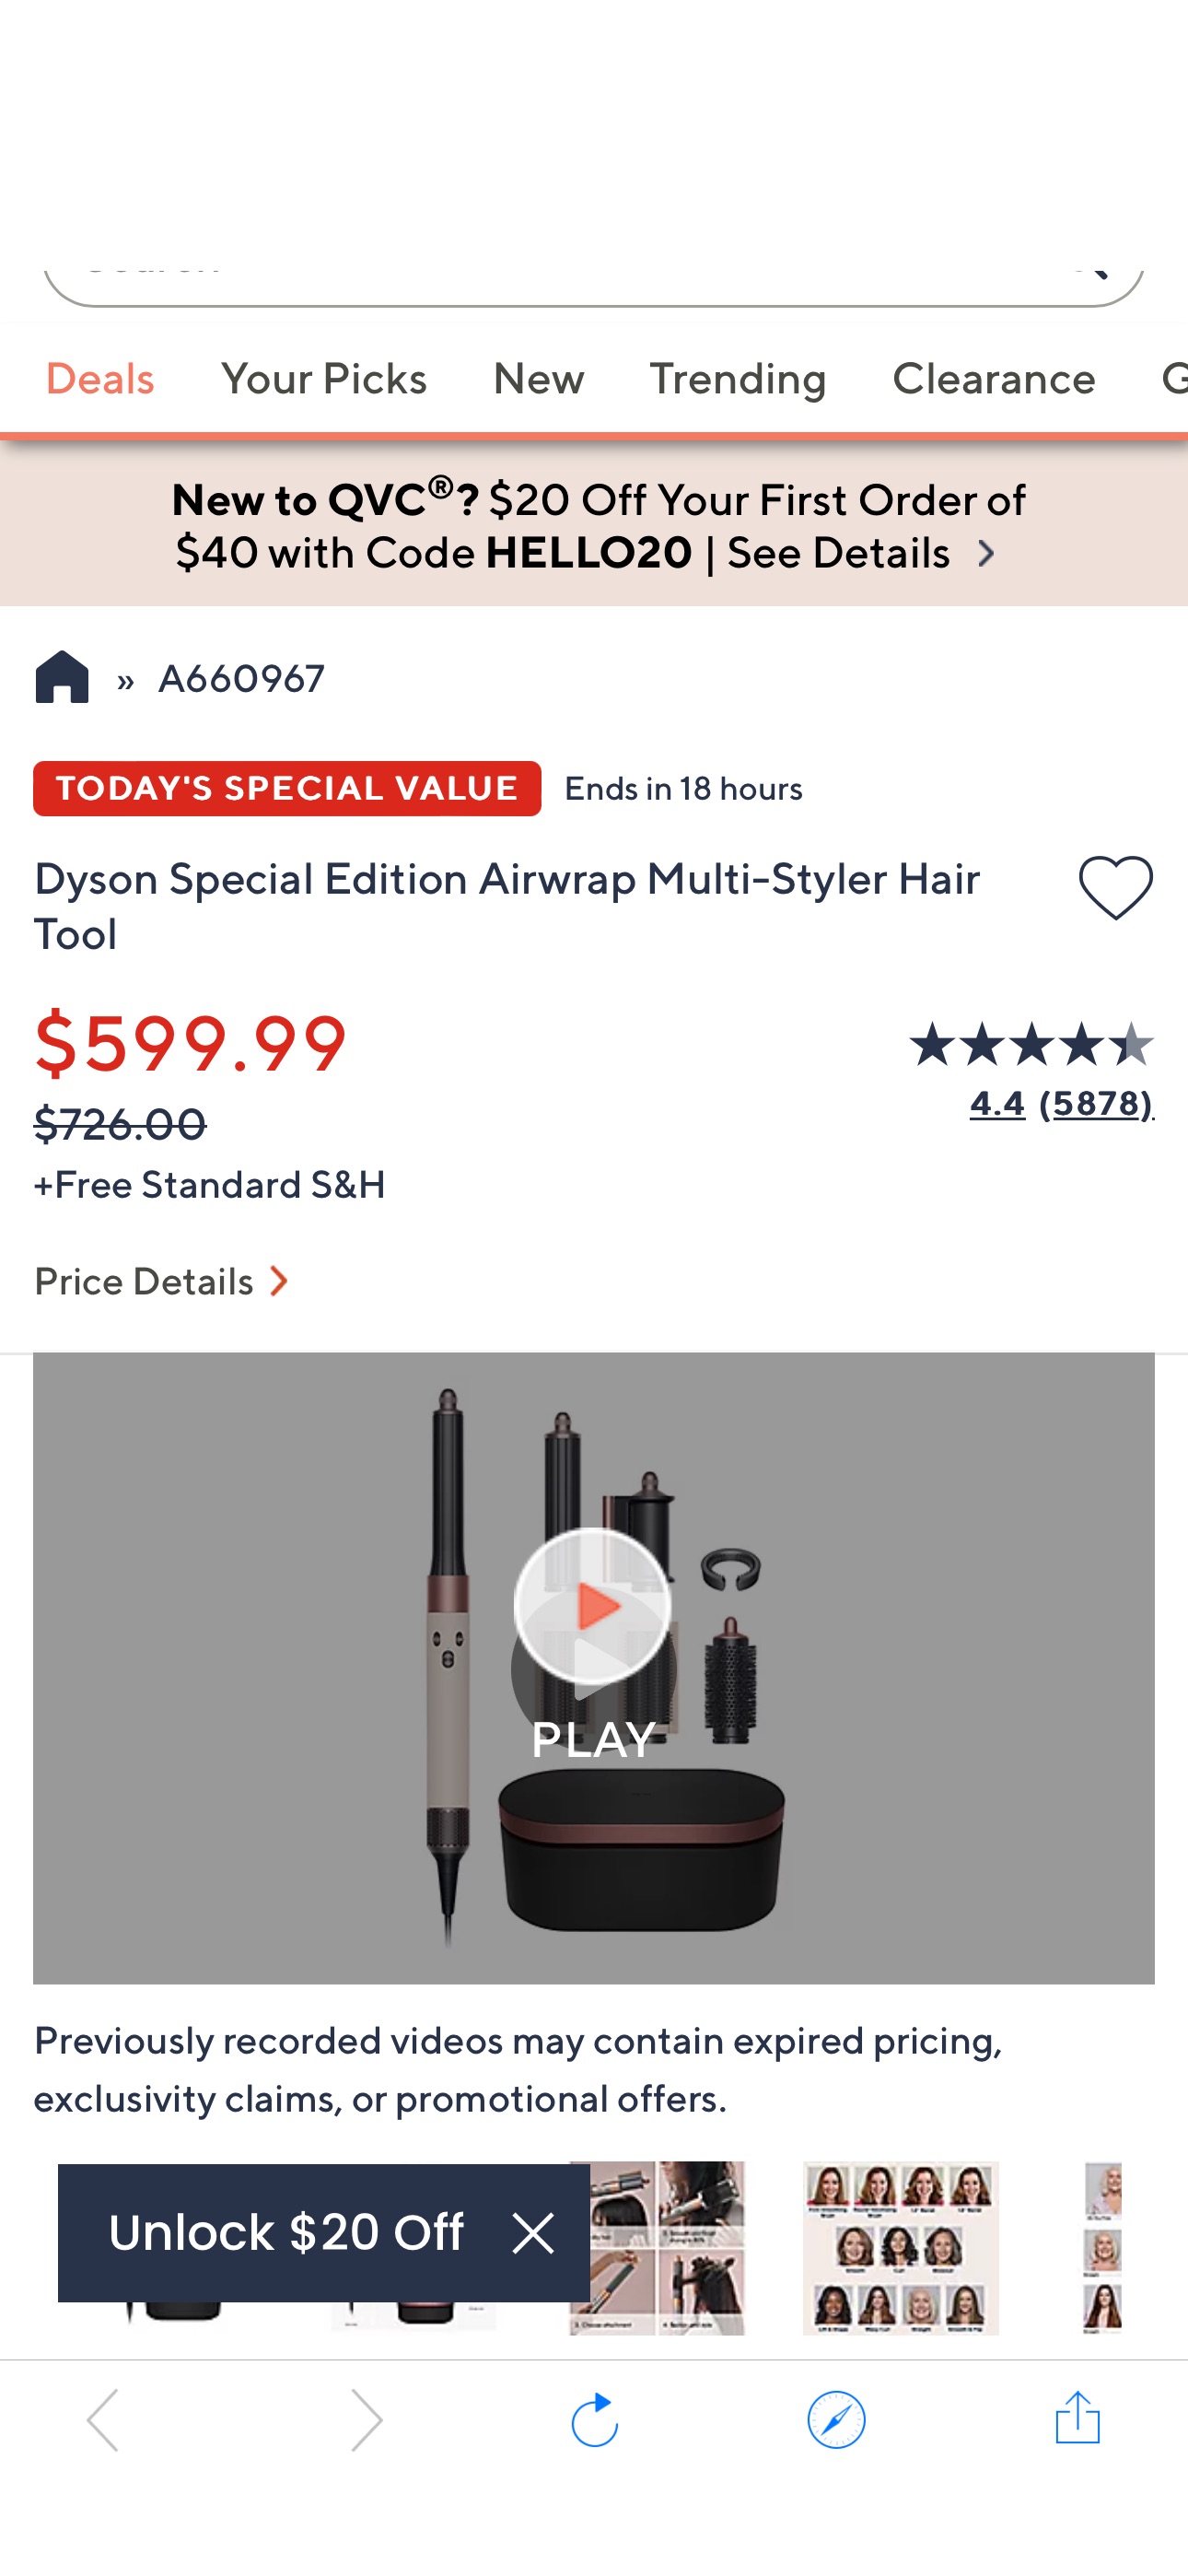 Dyson Special Edition Airwrap Multi-Styler Hair Tool - QVC.com 折扣码：HELLO20